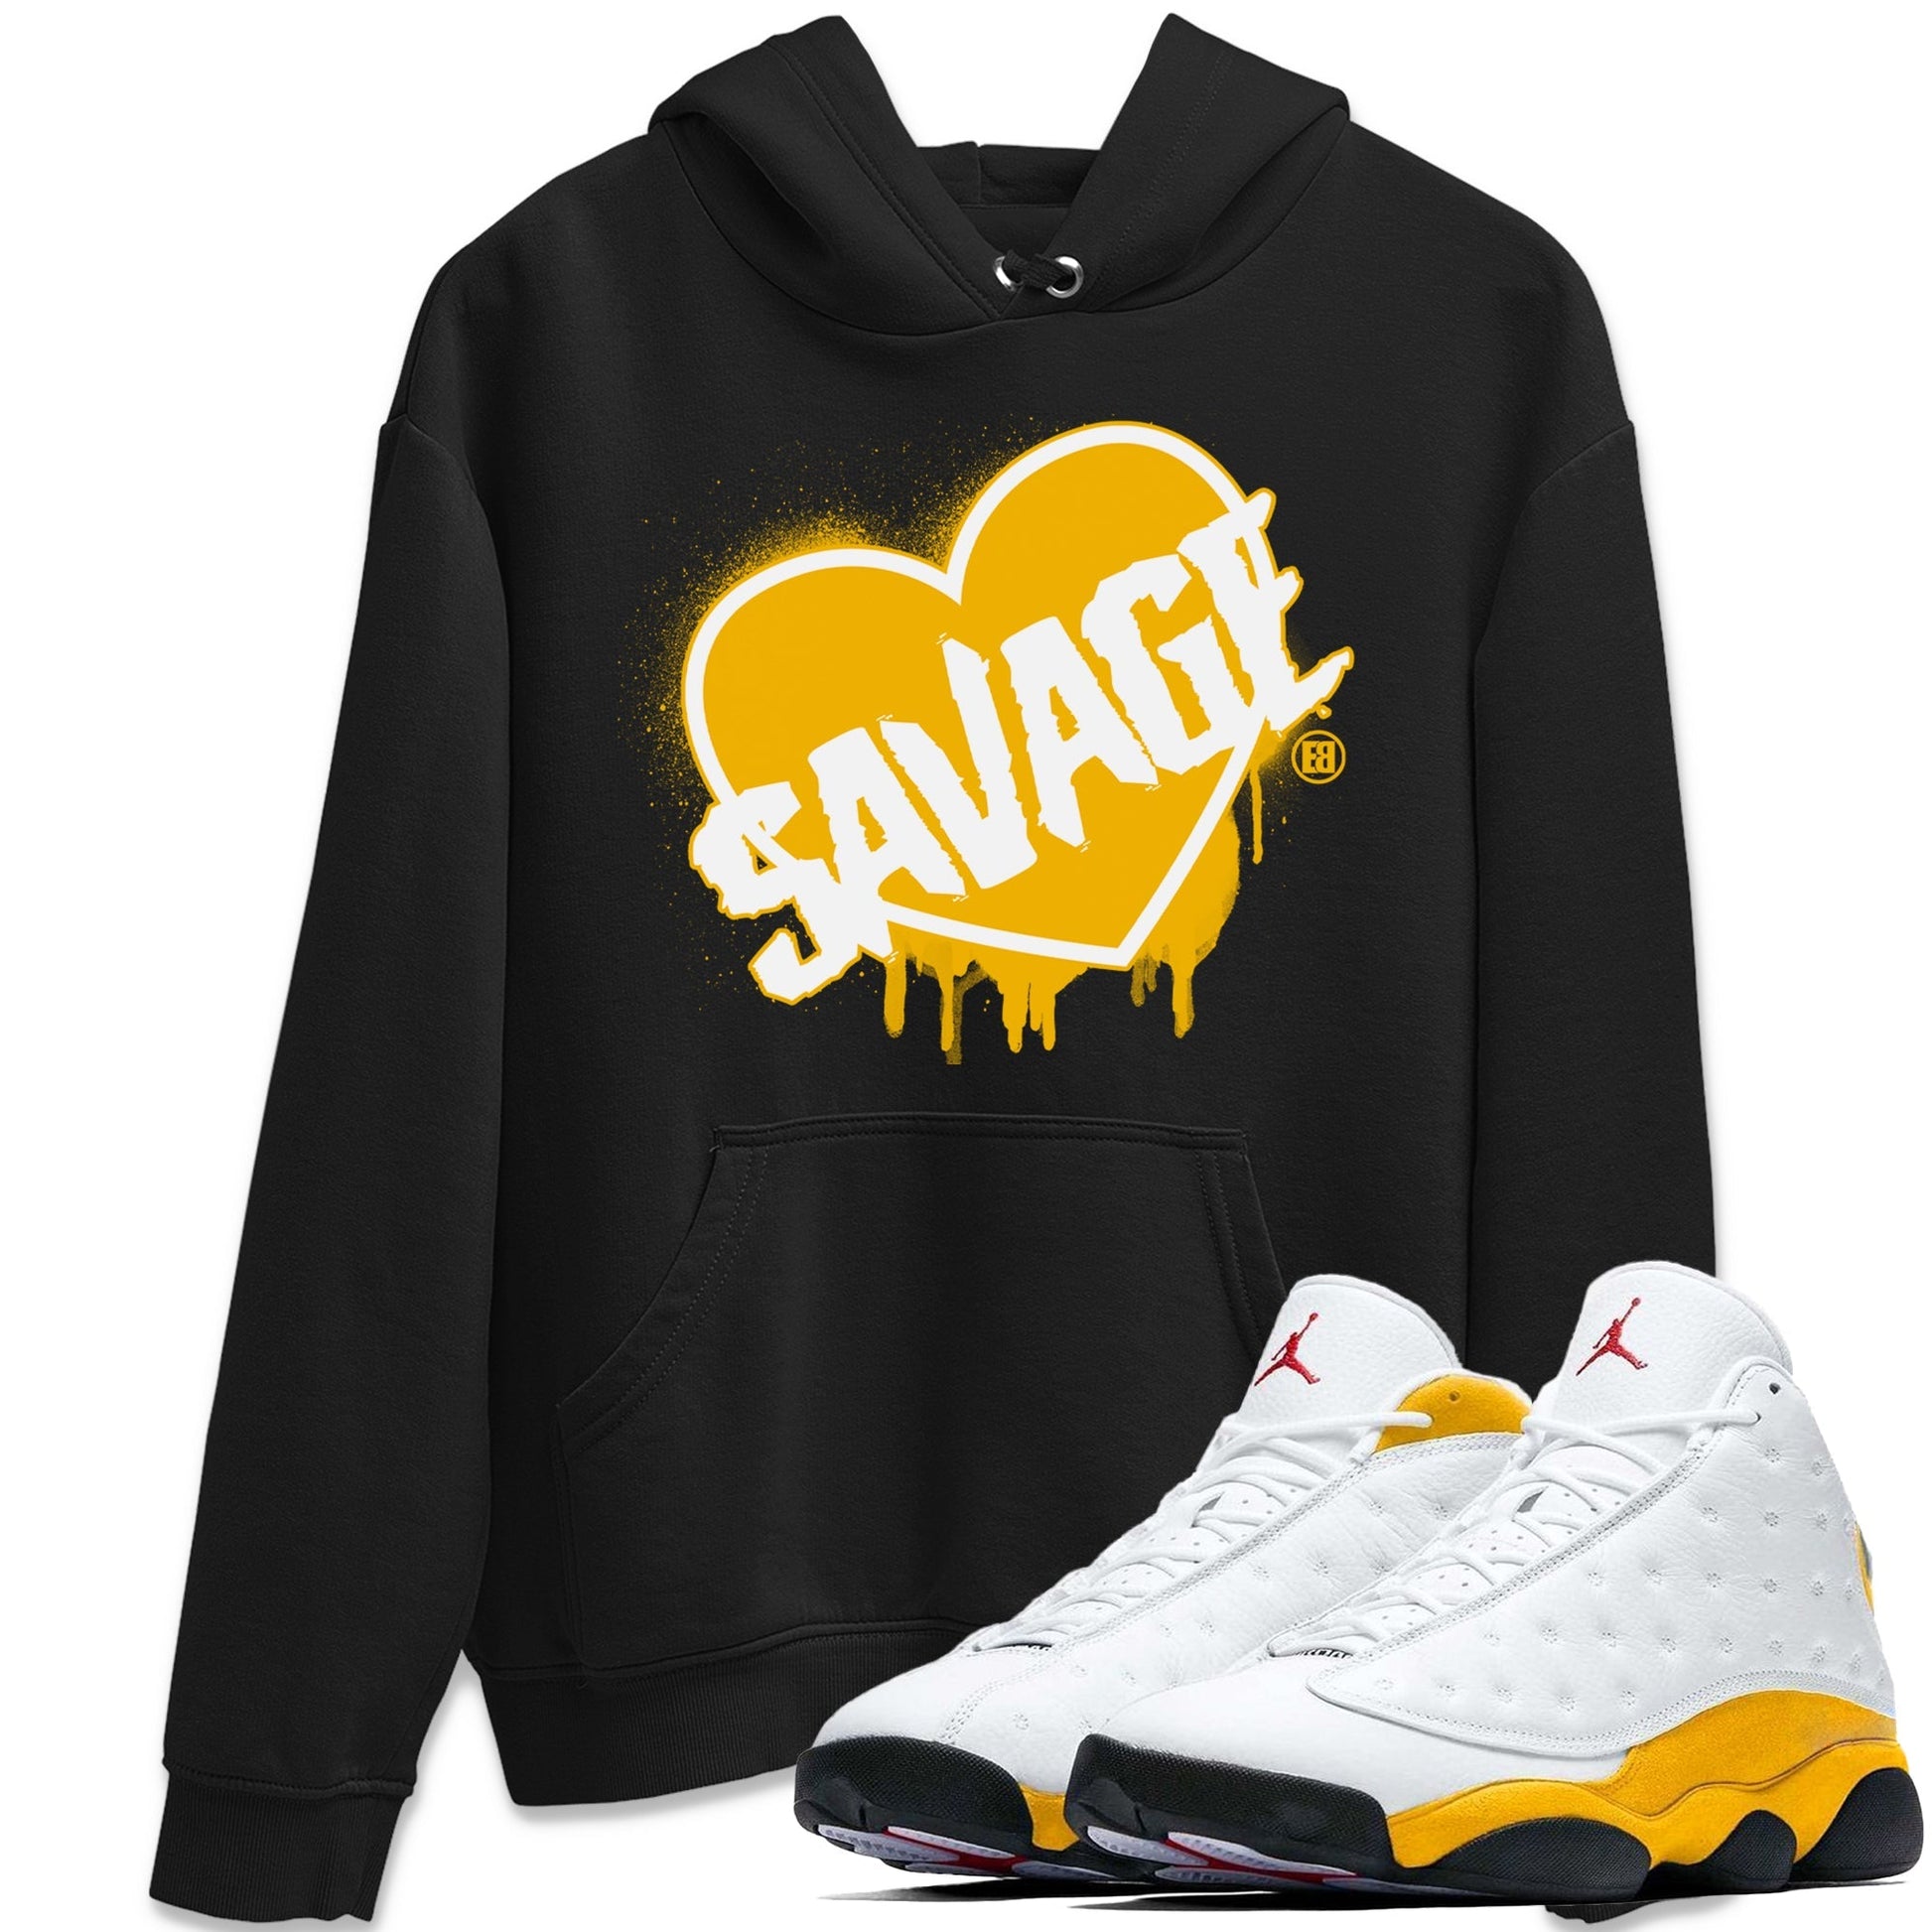 Jordan 13 Del Sol Sneaker Match Tees Savage Love Sneaker Tees Jordan 13 Del Sol Sneaker Release Tees Unisex Shirts